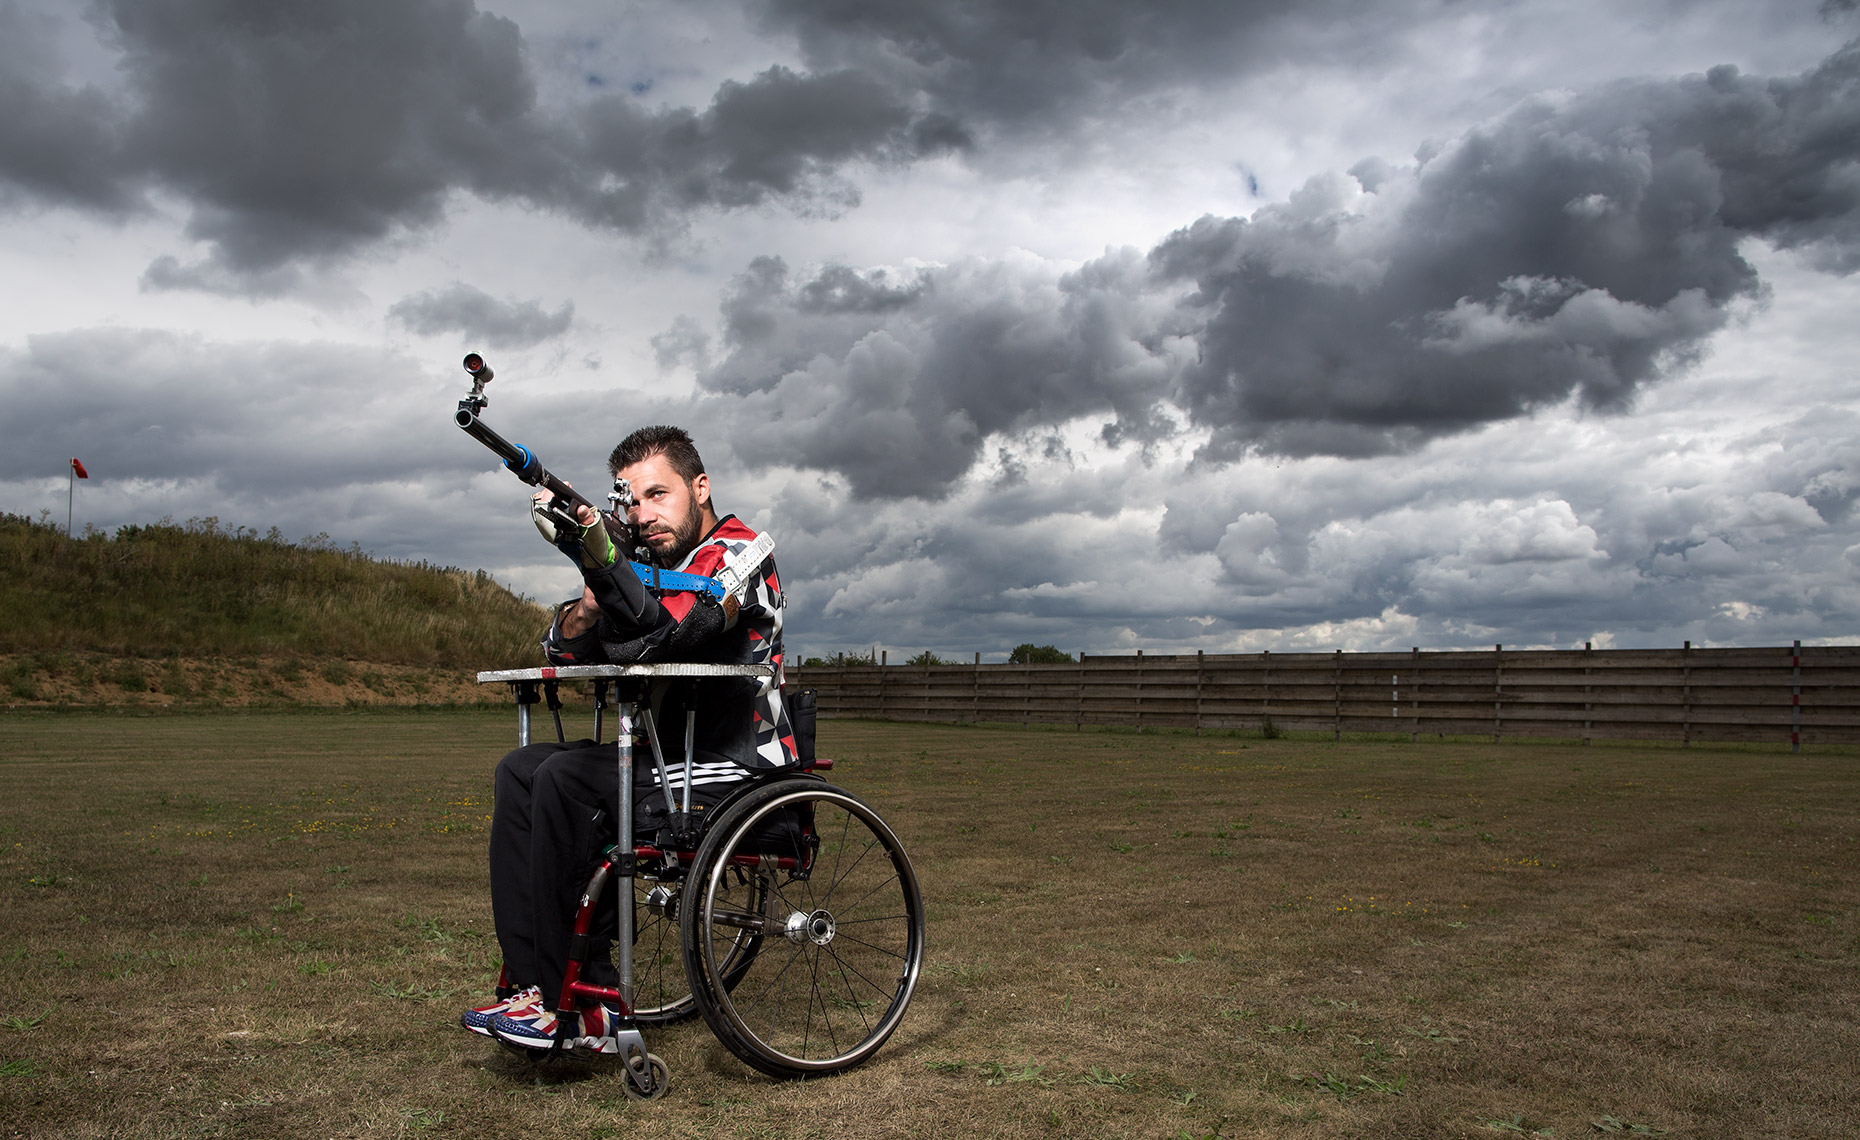 Paralympics gold medalist sport shooter Matthew Skelhon training at the range.